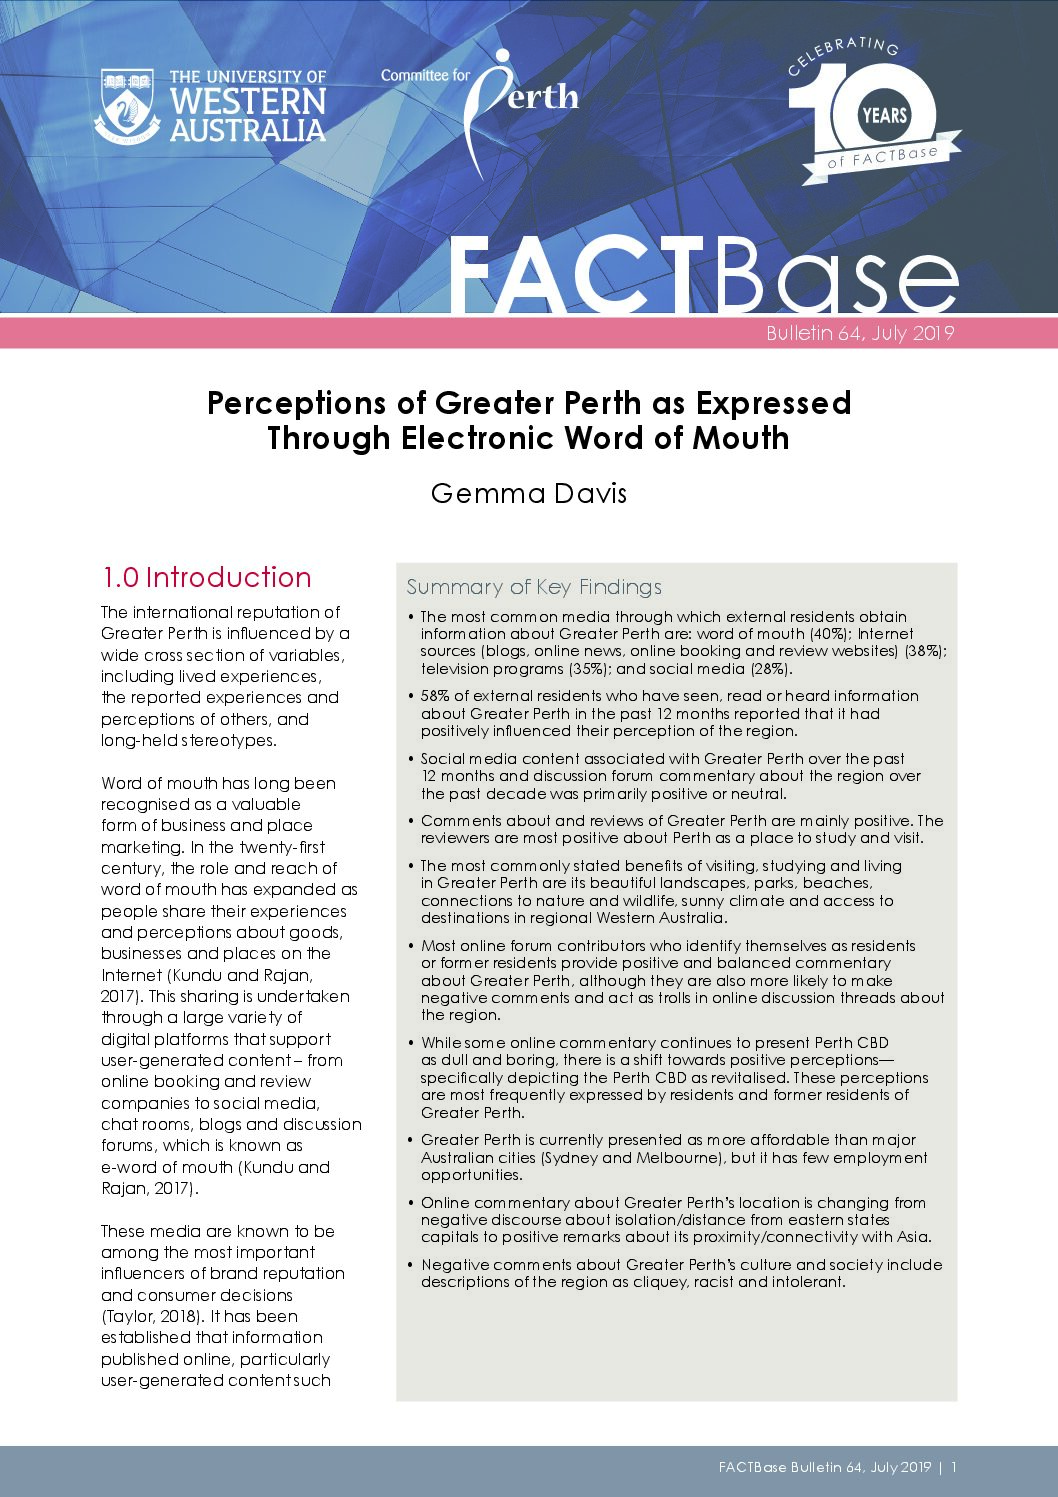 FACTBase Bulletin 64 - July 2019